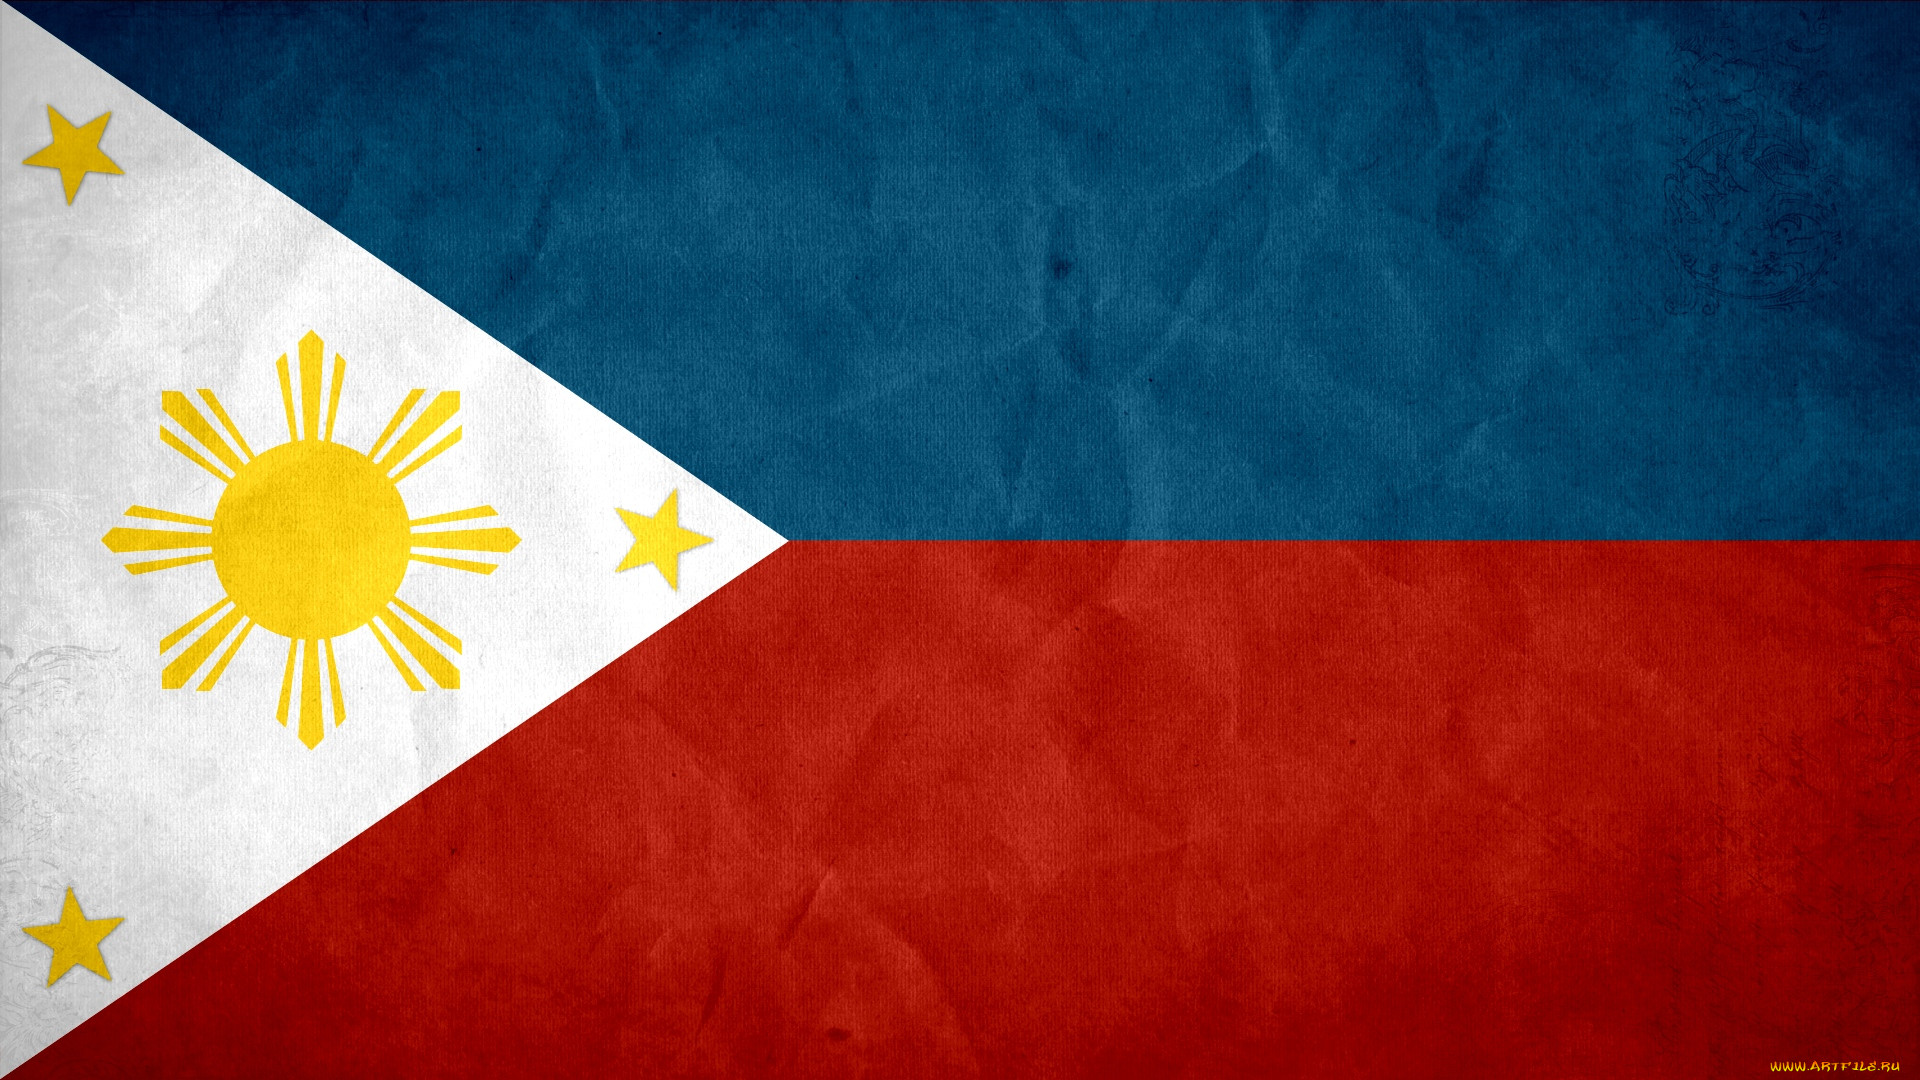 Terra amore. Филиппины флаг. Филиппины флаг и герб. Флаг Филиппины разные. Филиппины флаг столица.